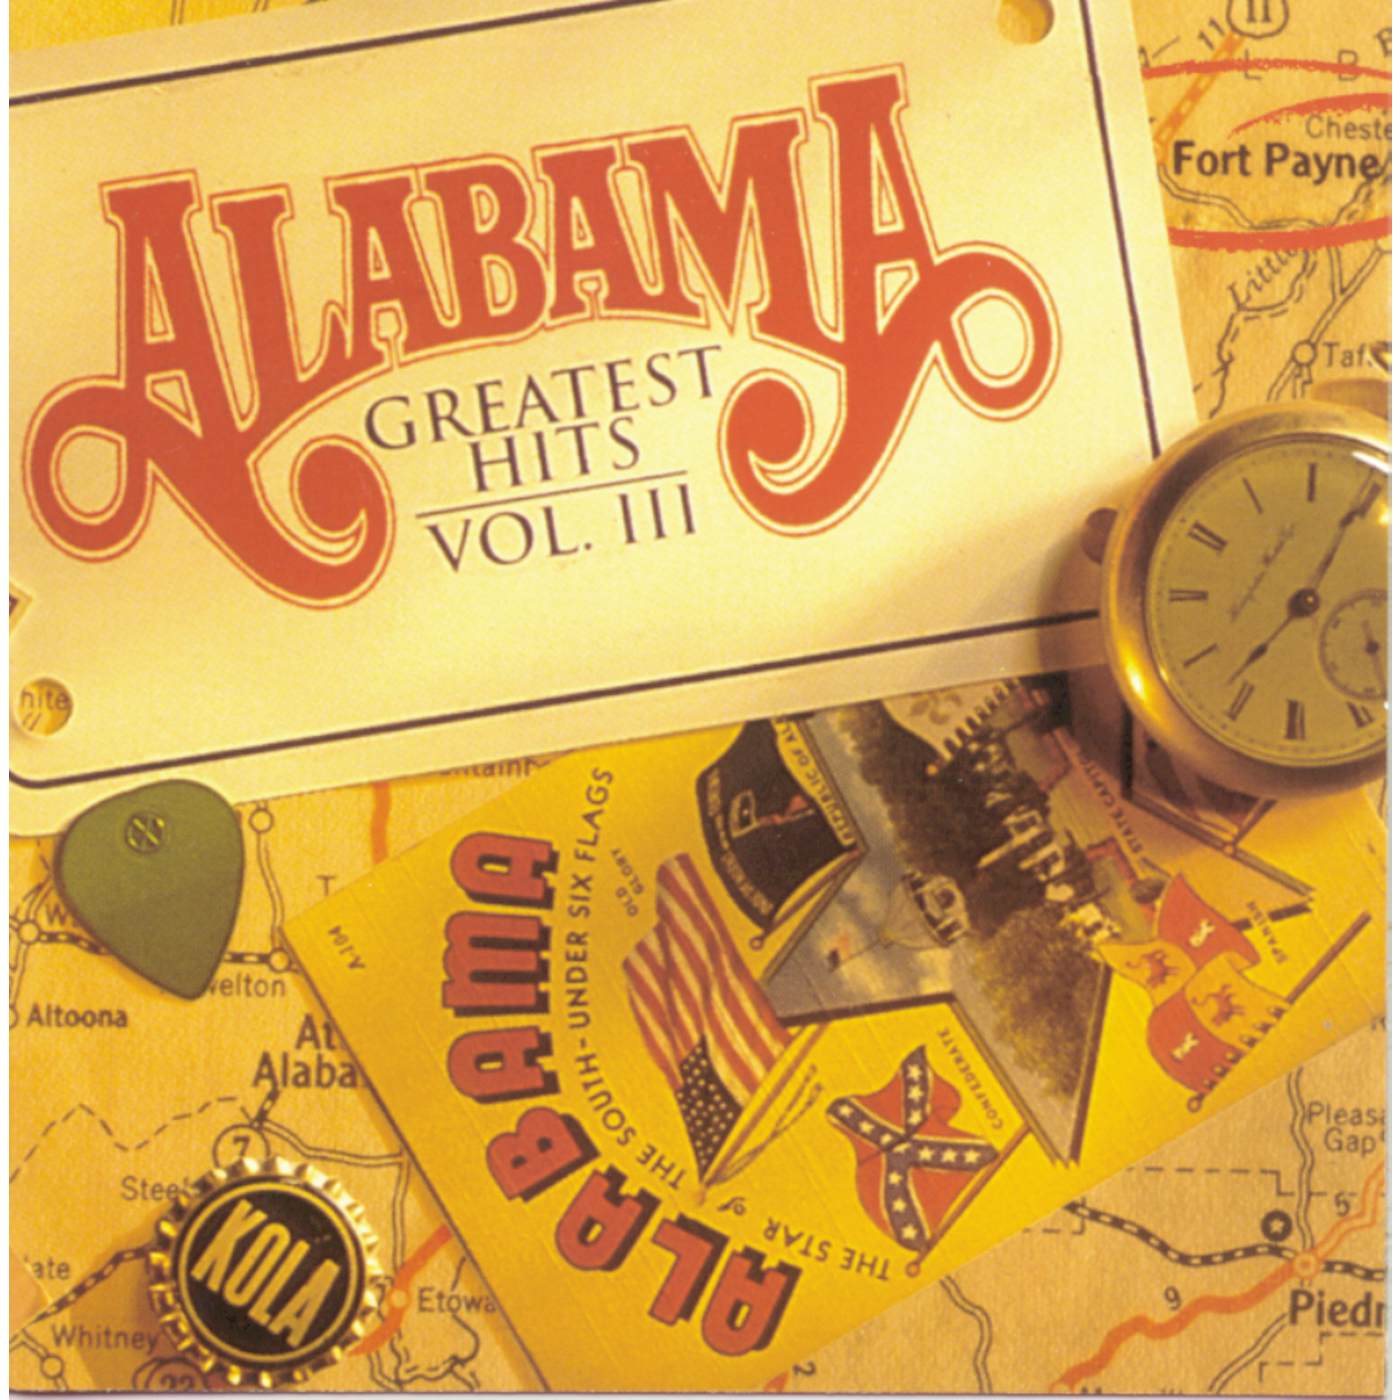 Alabama GREATEST HITS 3 CD